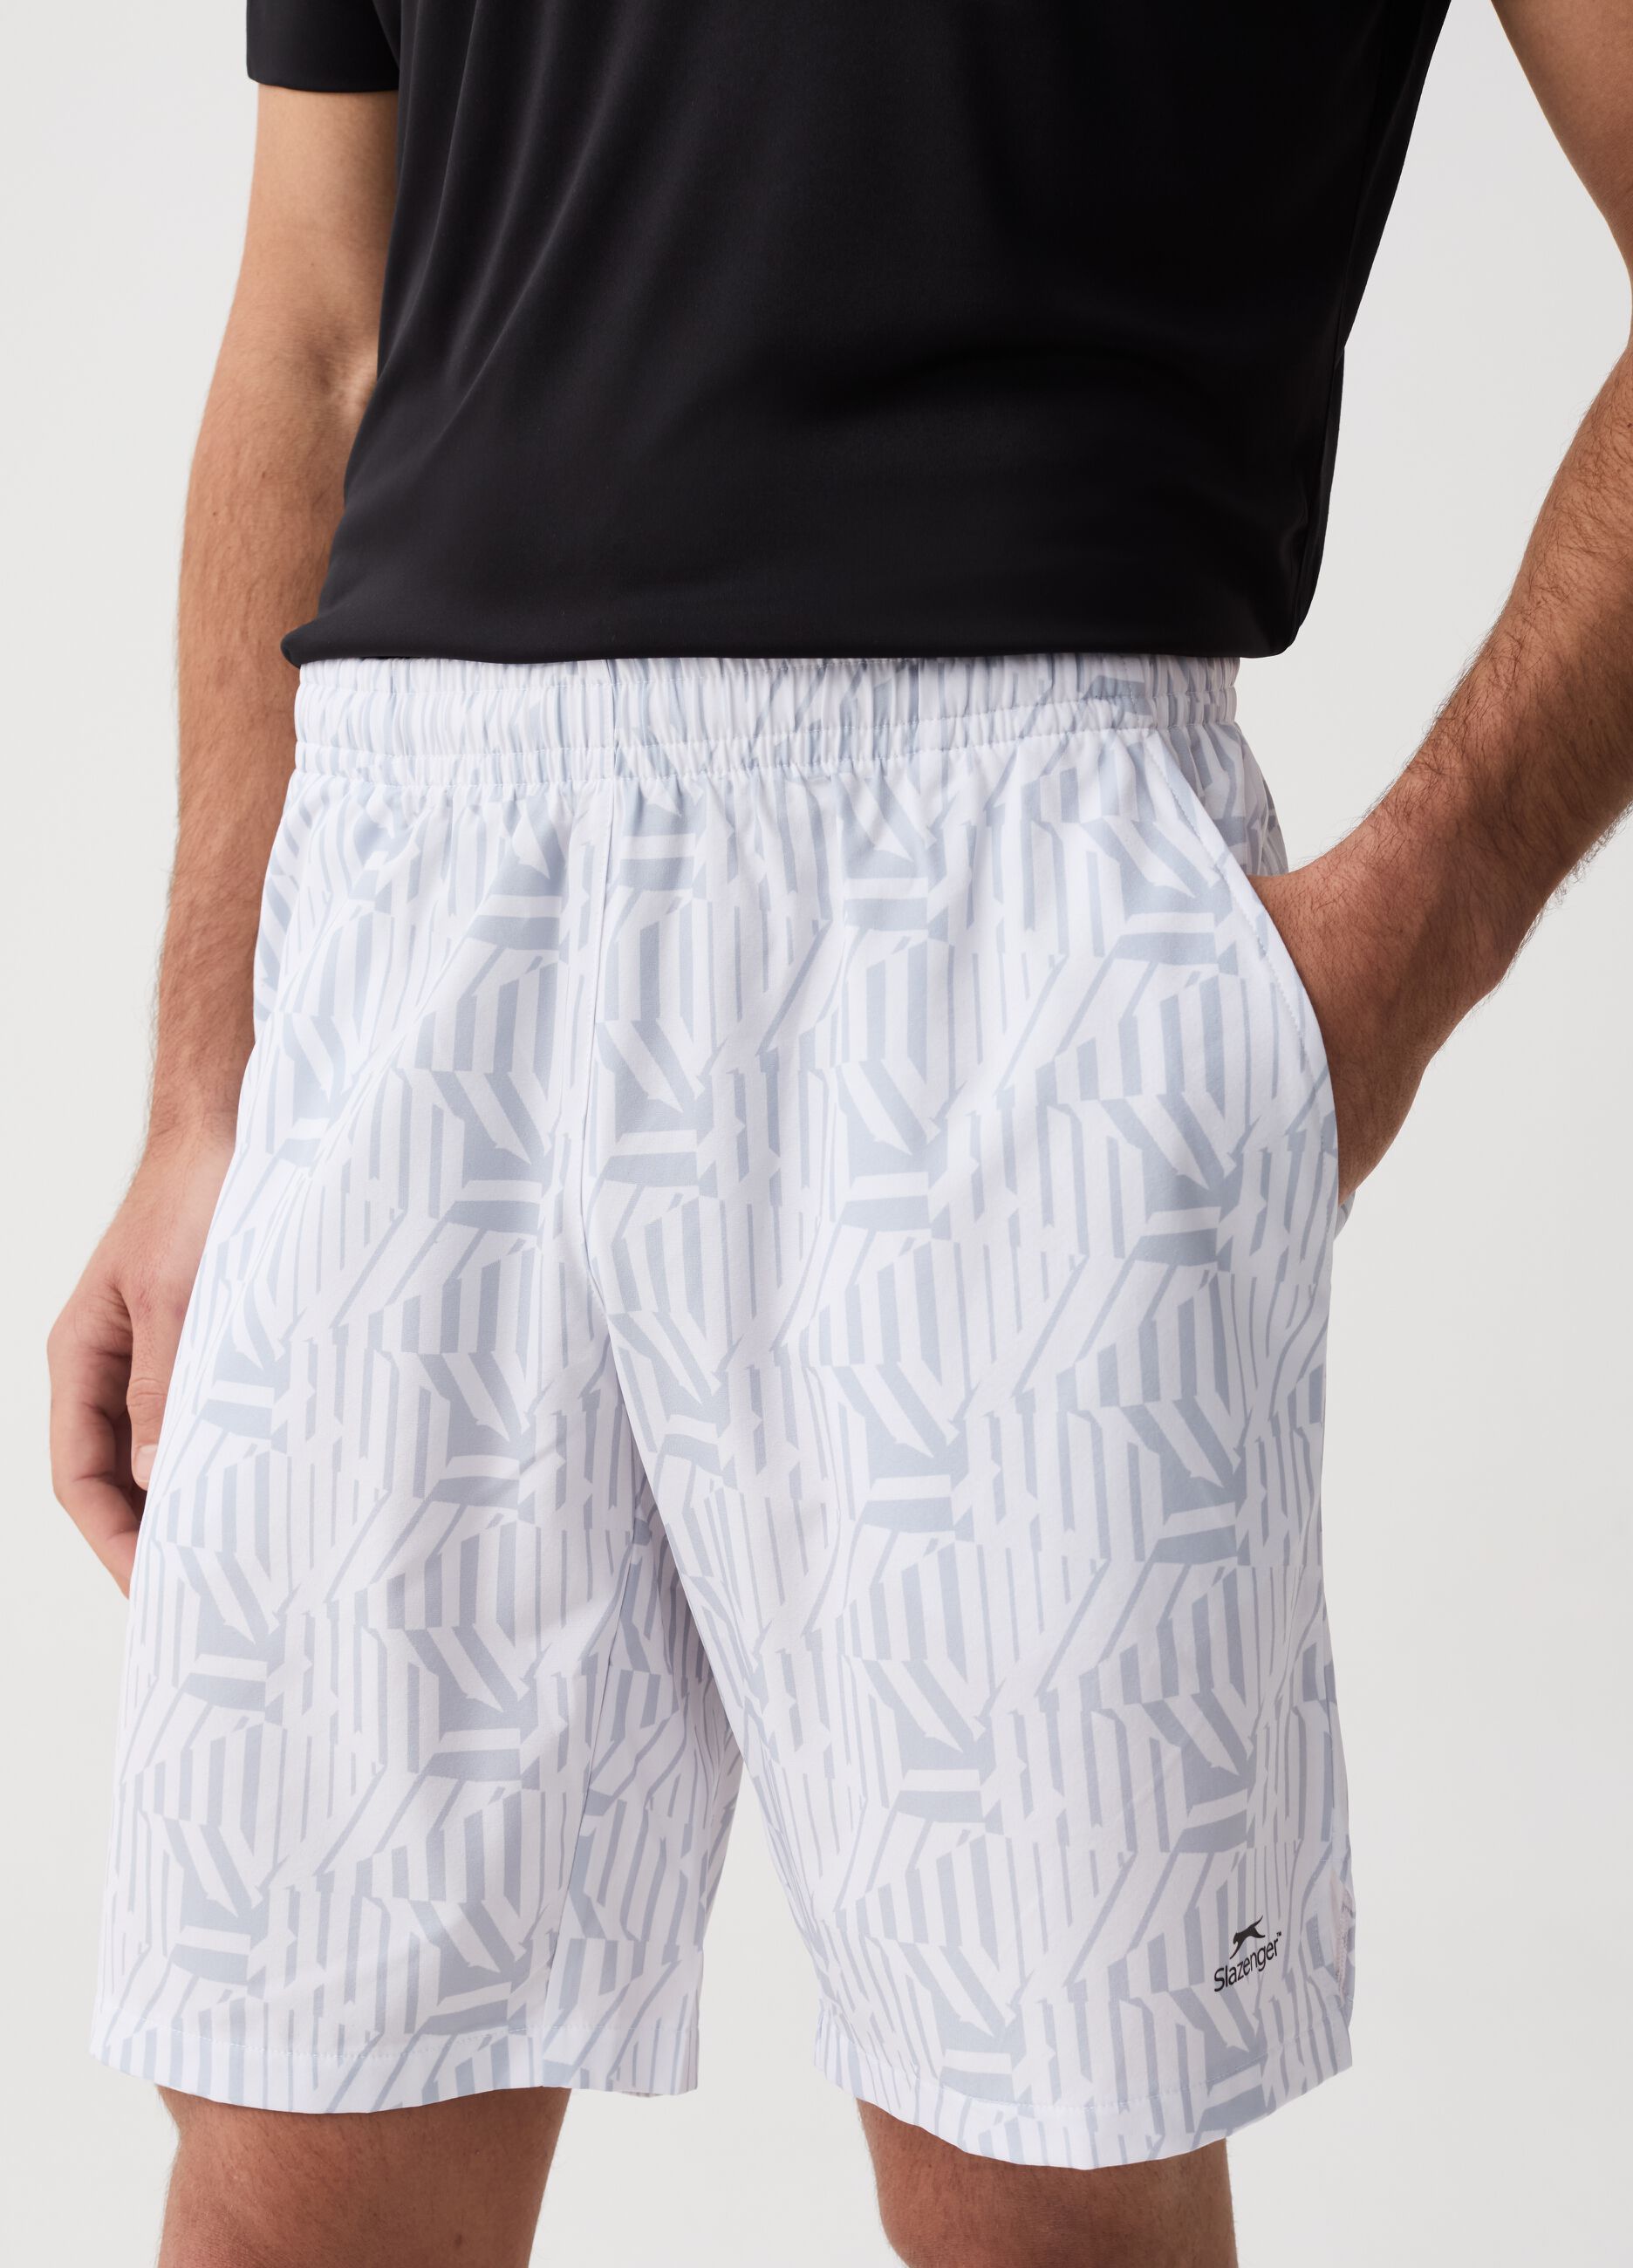 Slazenger quick-dry tennis Bermuda shorts